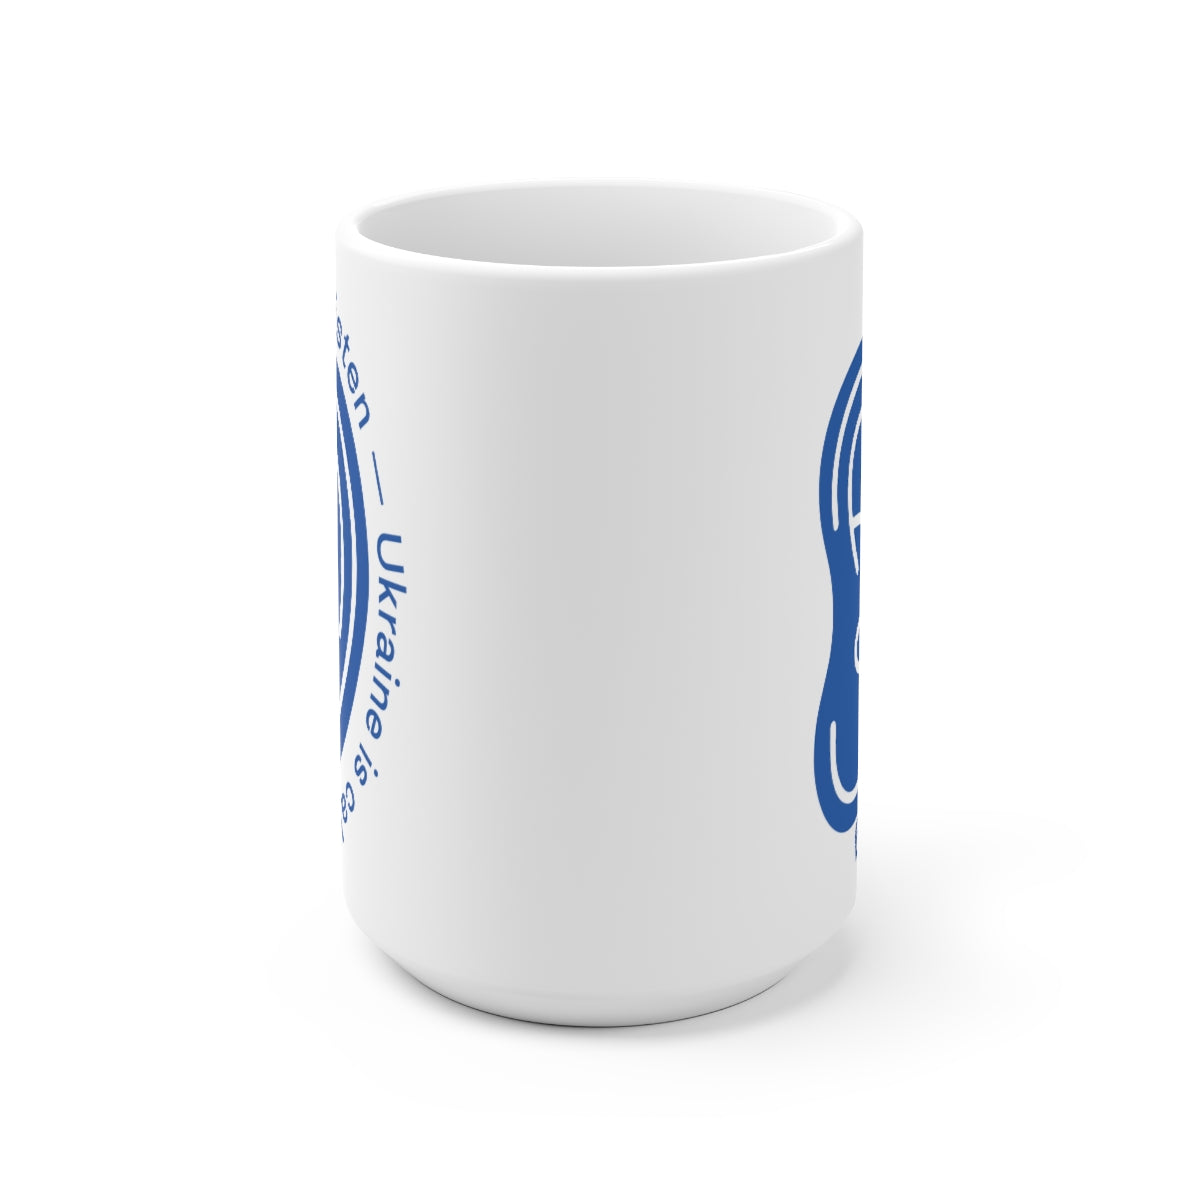 Listen To Ukraine's Call -  Ceramic Mug